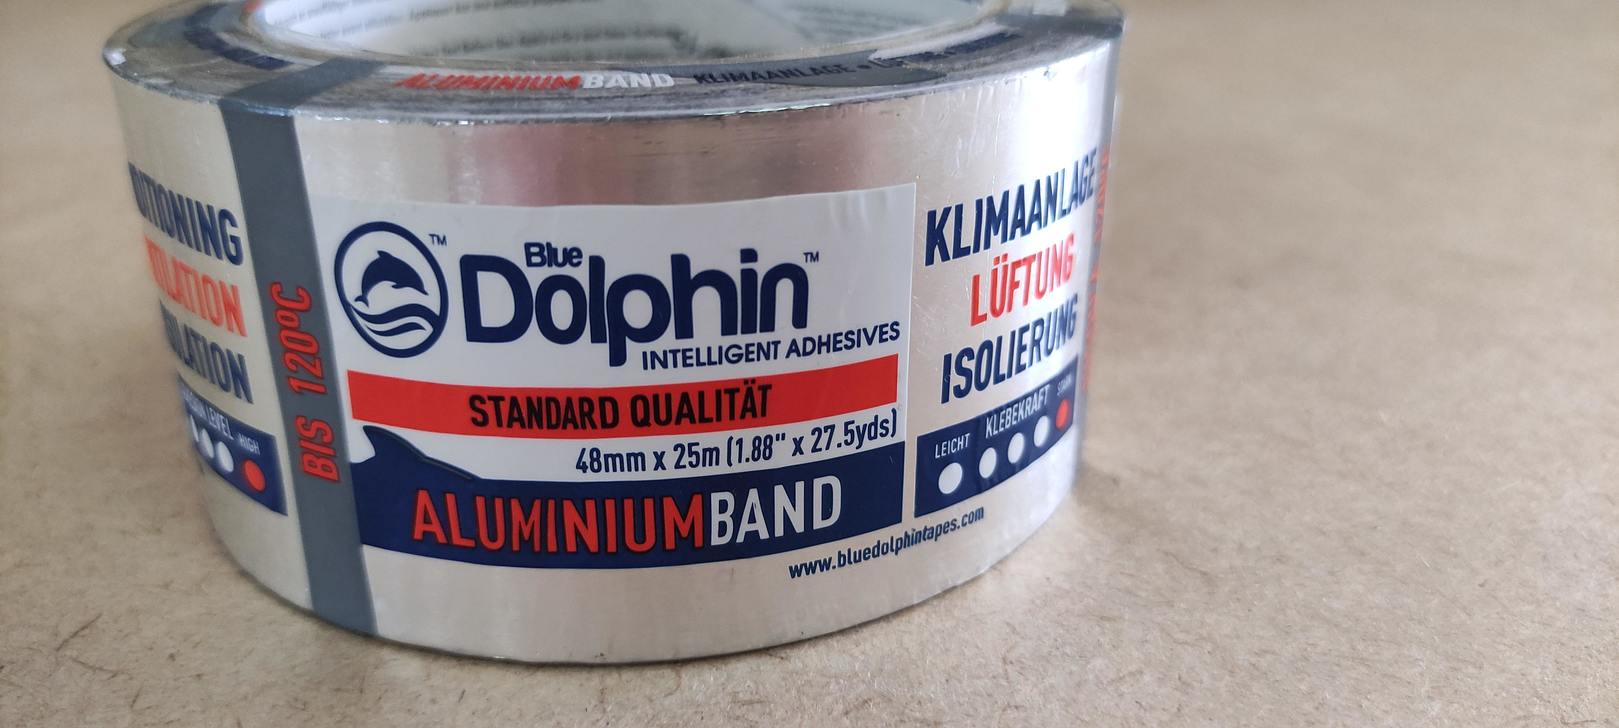 Алюминевая лента 48 мм х 25 м BlueDolphin (07-1-02)